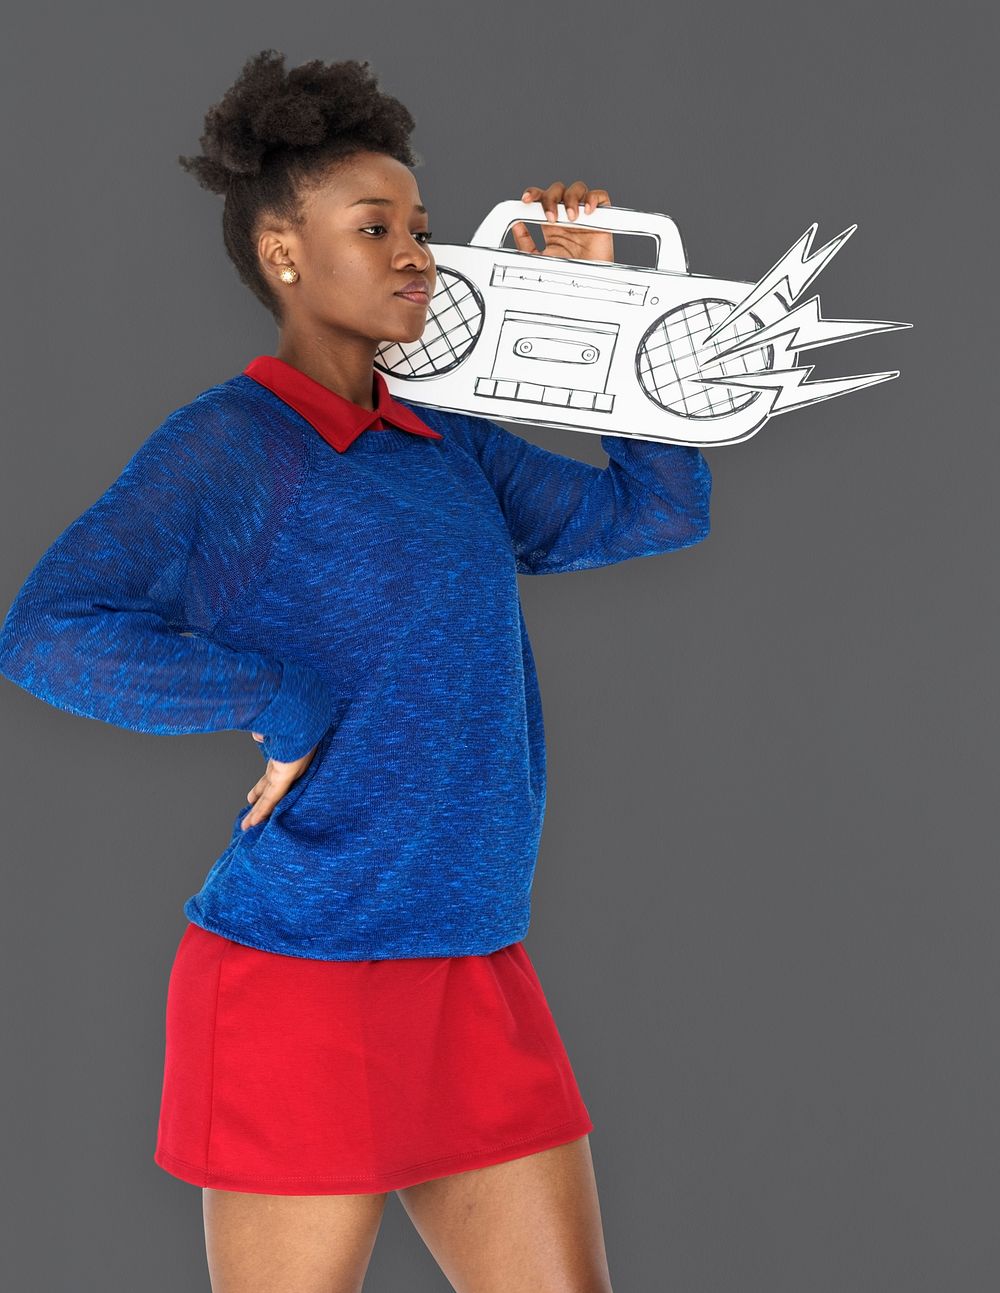 African Female holding Illutration Radio